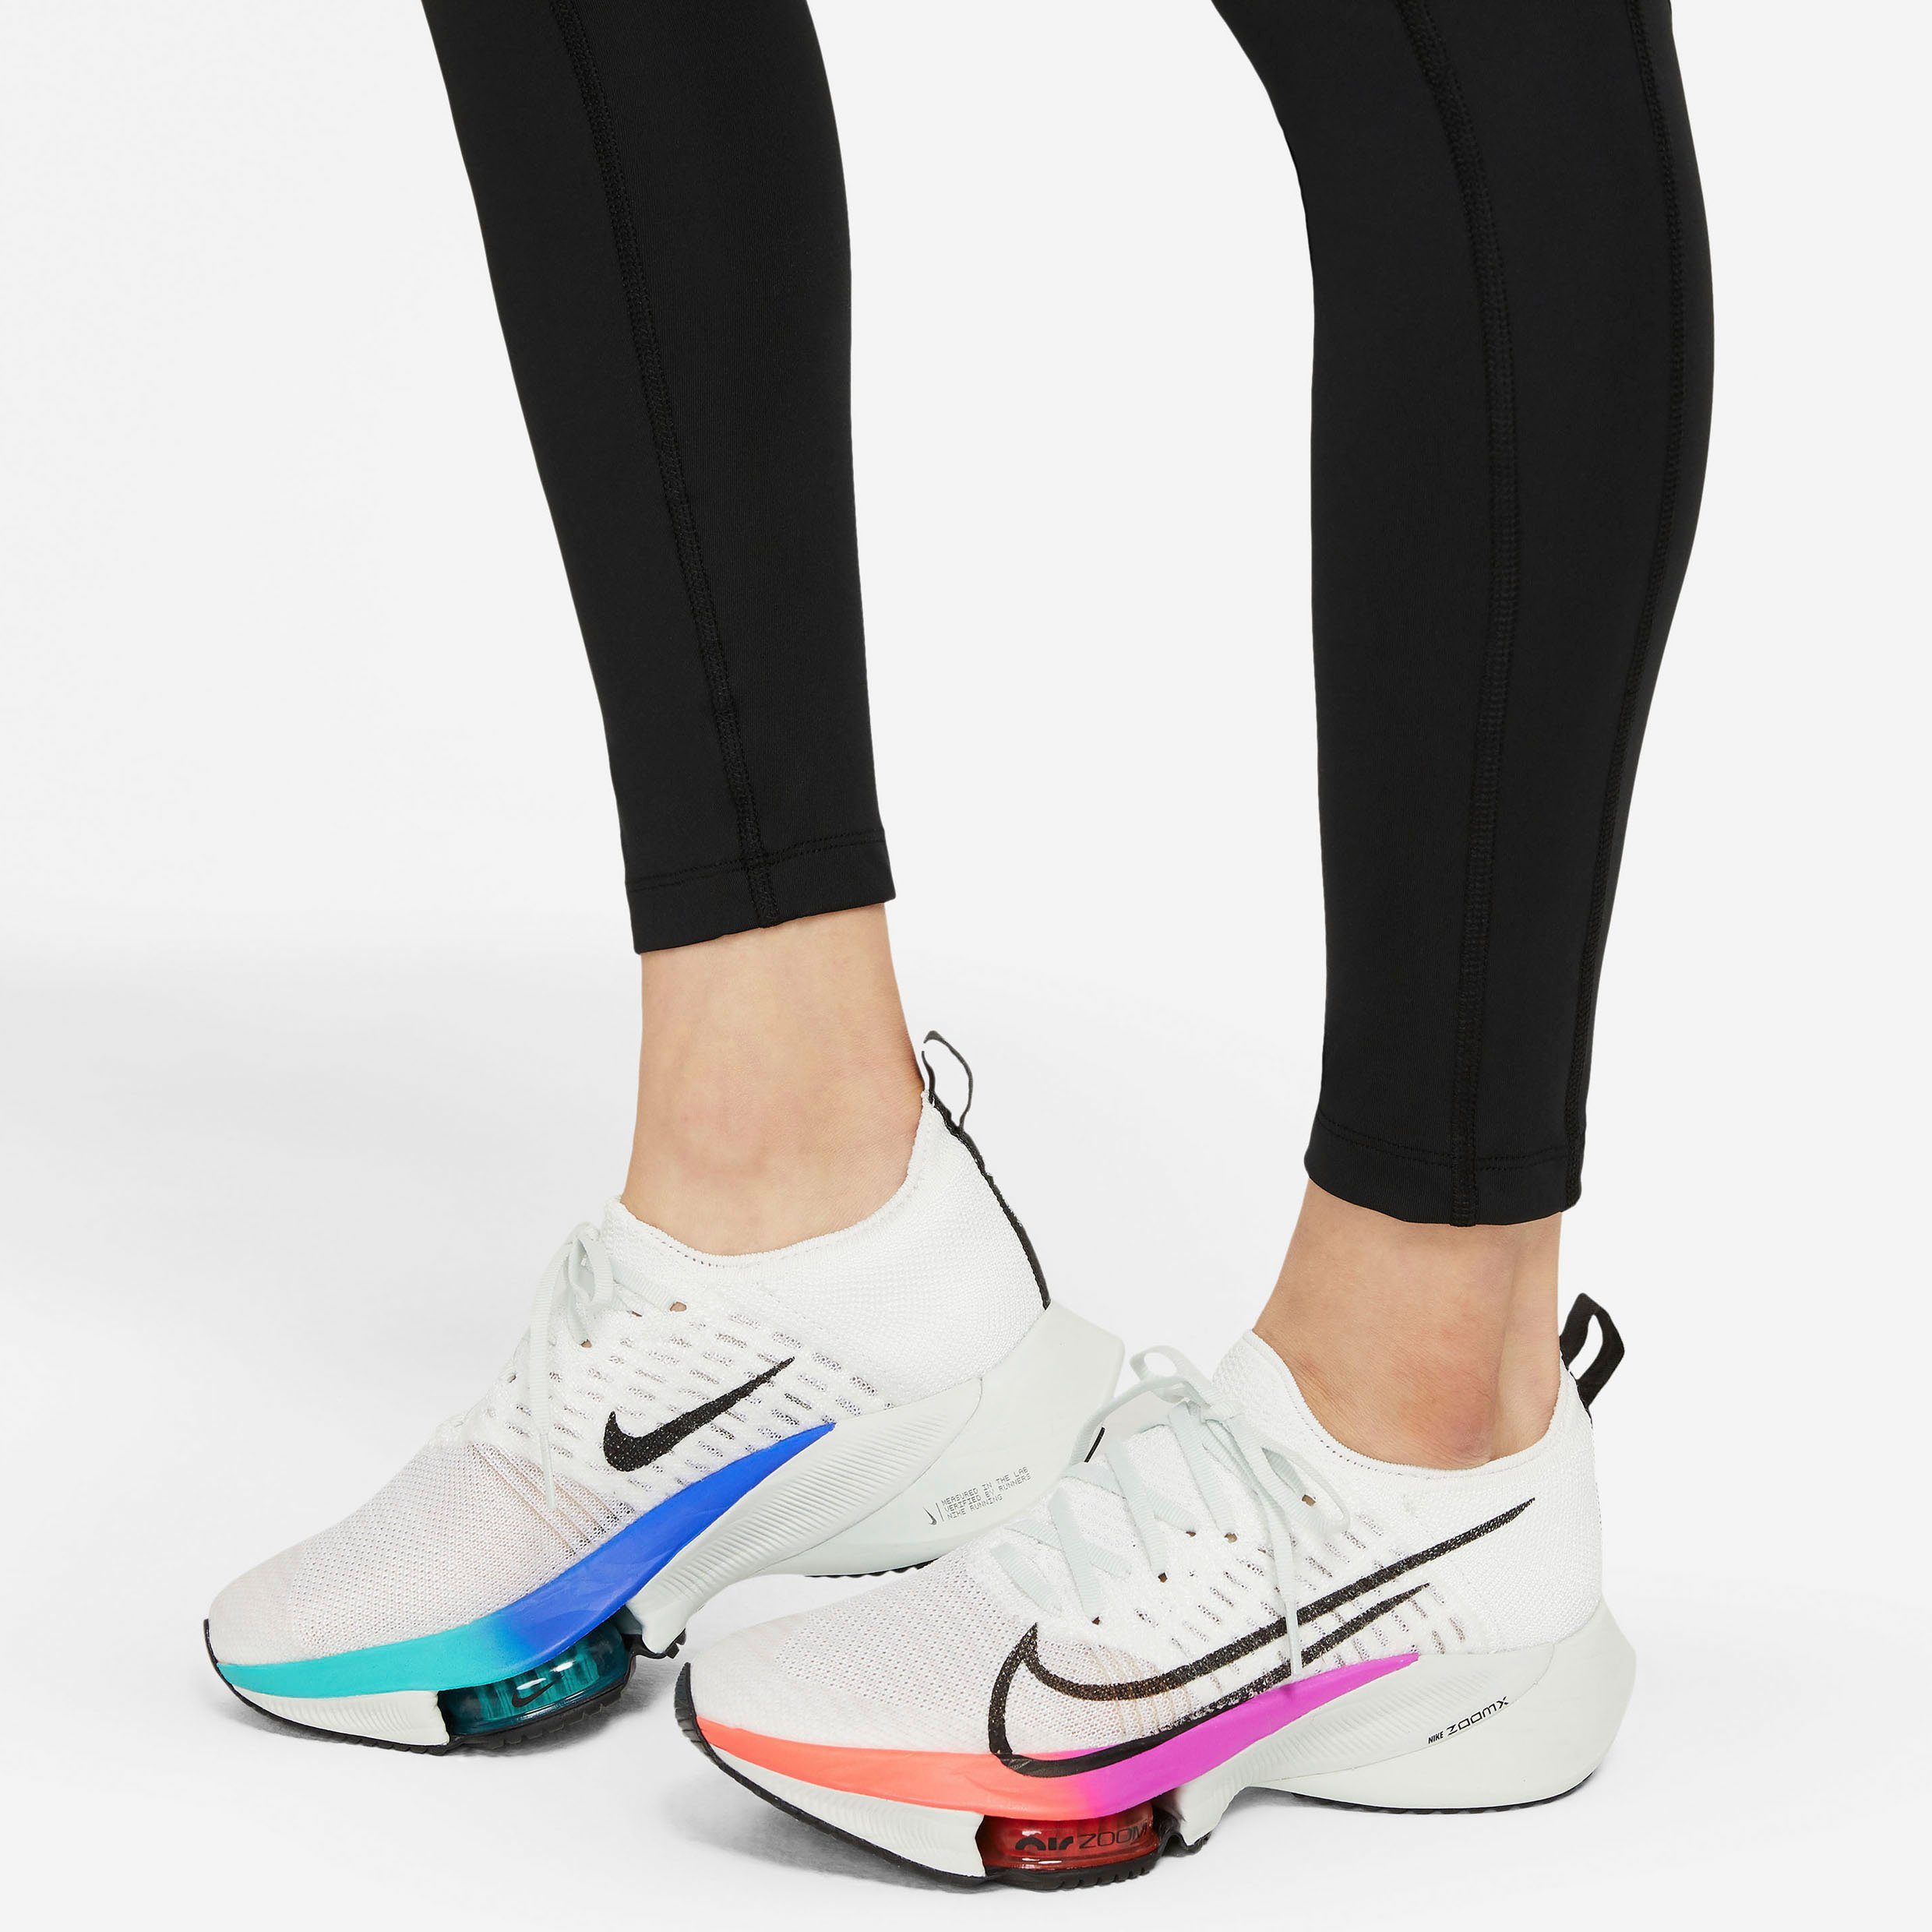 Nike Lauftights LEGGINGS POCKET schwarz RUNNING MID-RISE FAST WOMEN'S EPIC